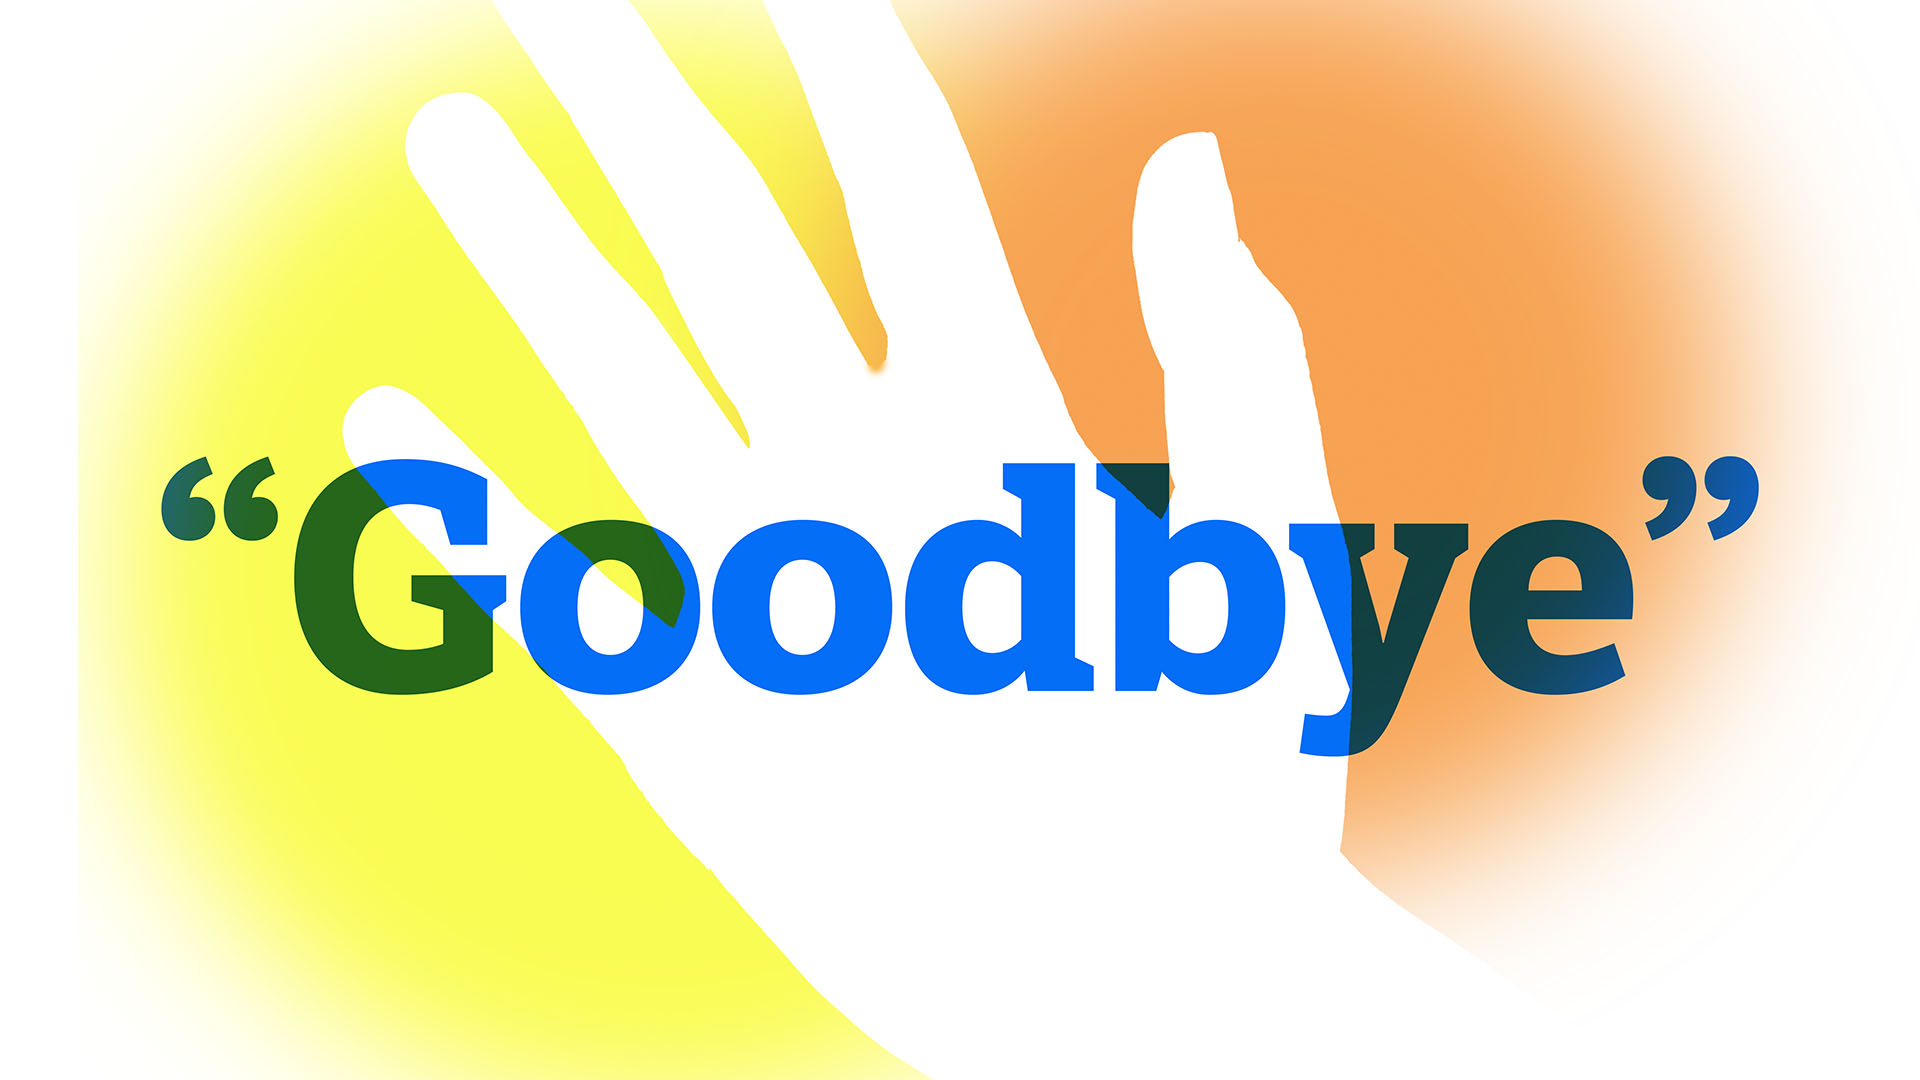 Adios, Adieu, And Cheerio: Why Do We Say "Goodbye?"